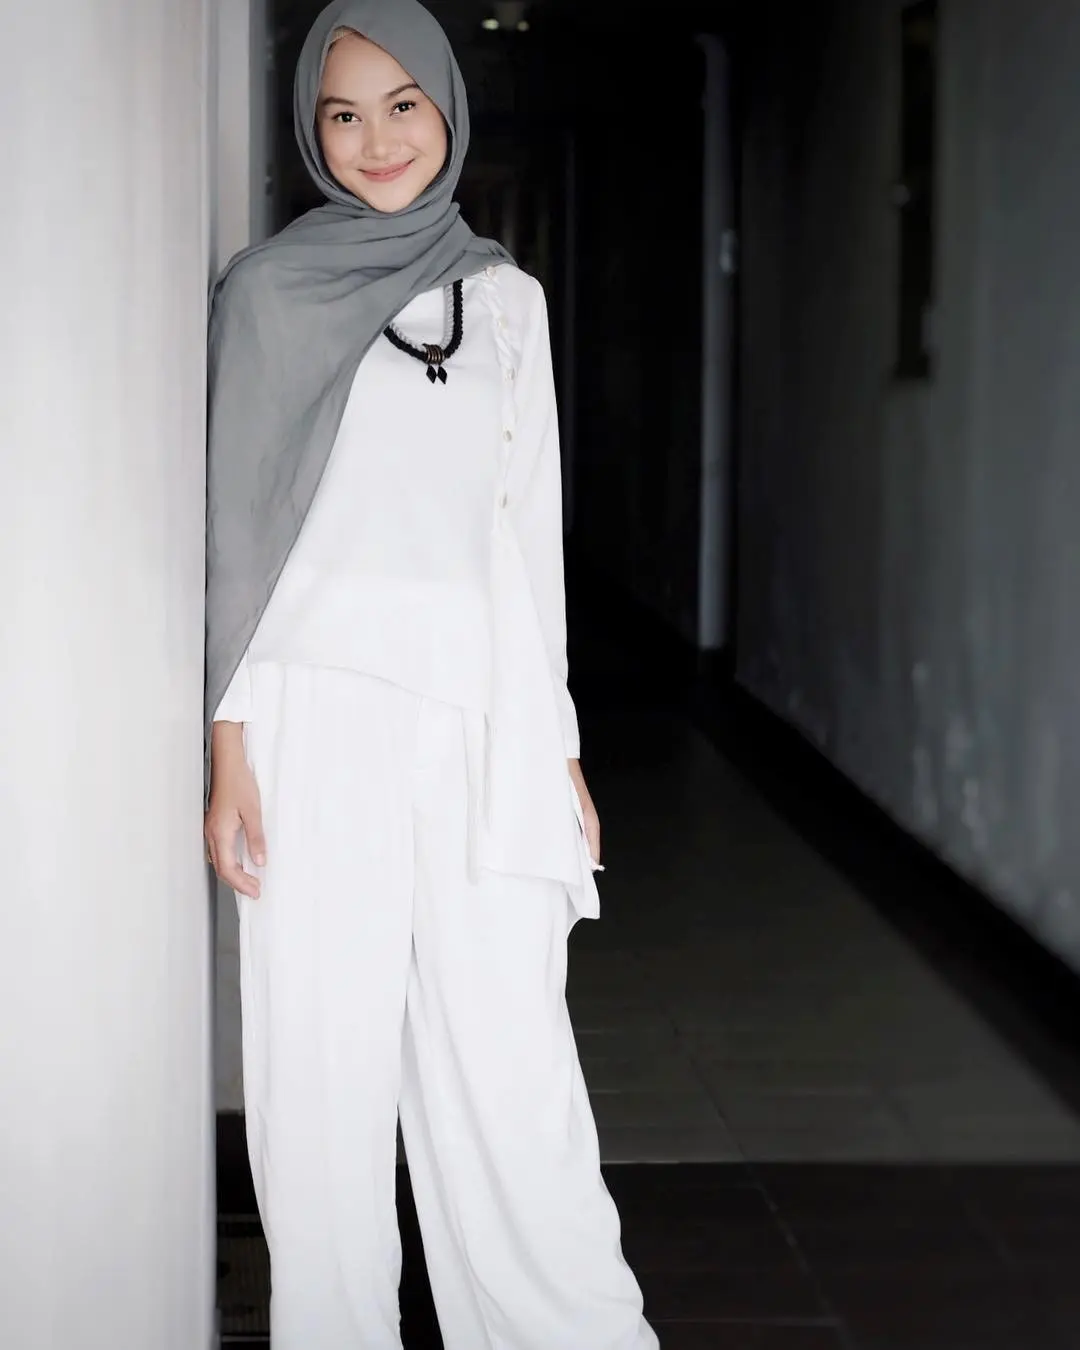 White on white untuk tampilan busana hijab kamu ketika berbuka puasa, boleh juga lho. (sumber foto: @indahnadapuspita/instagram)